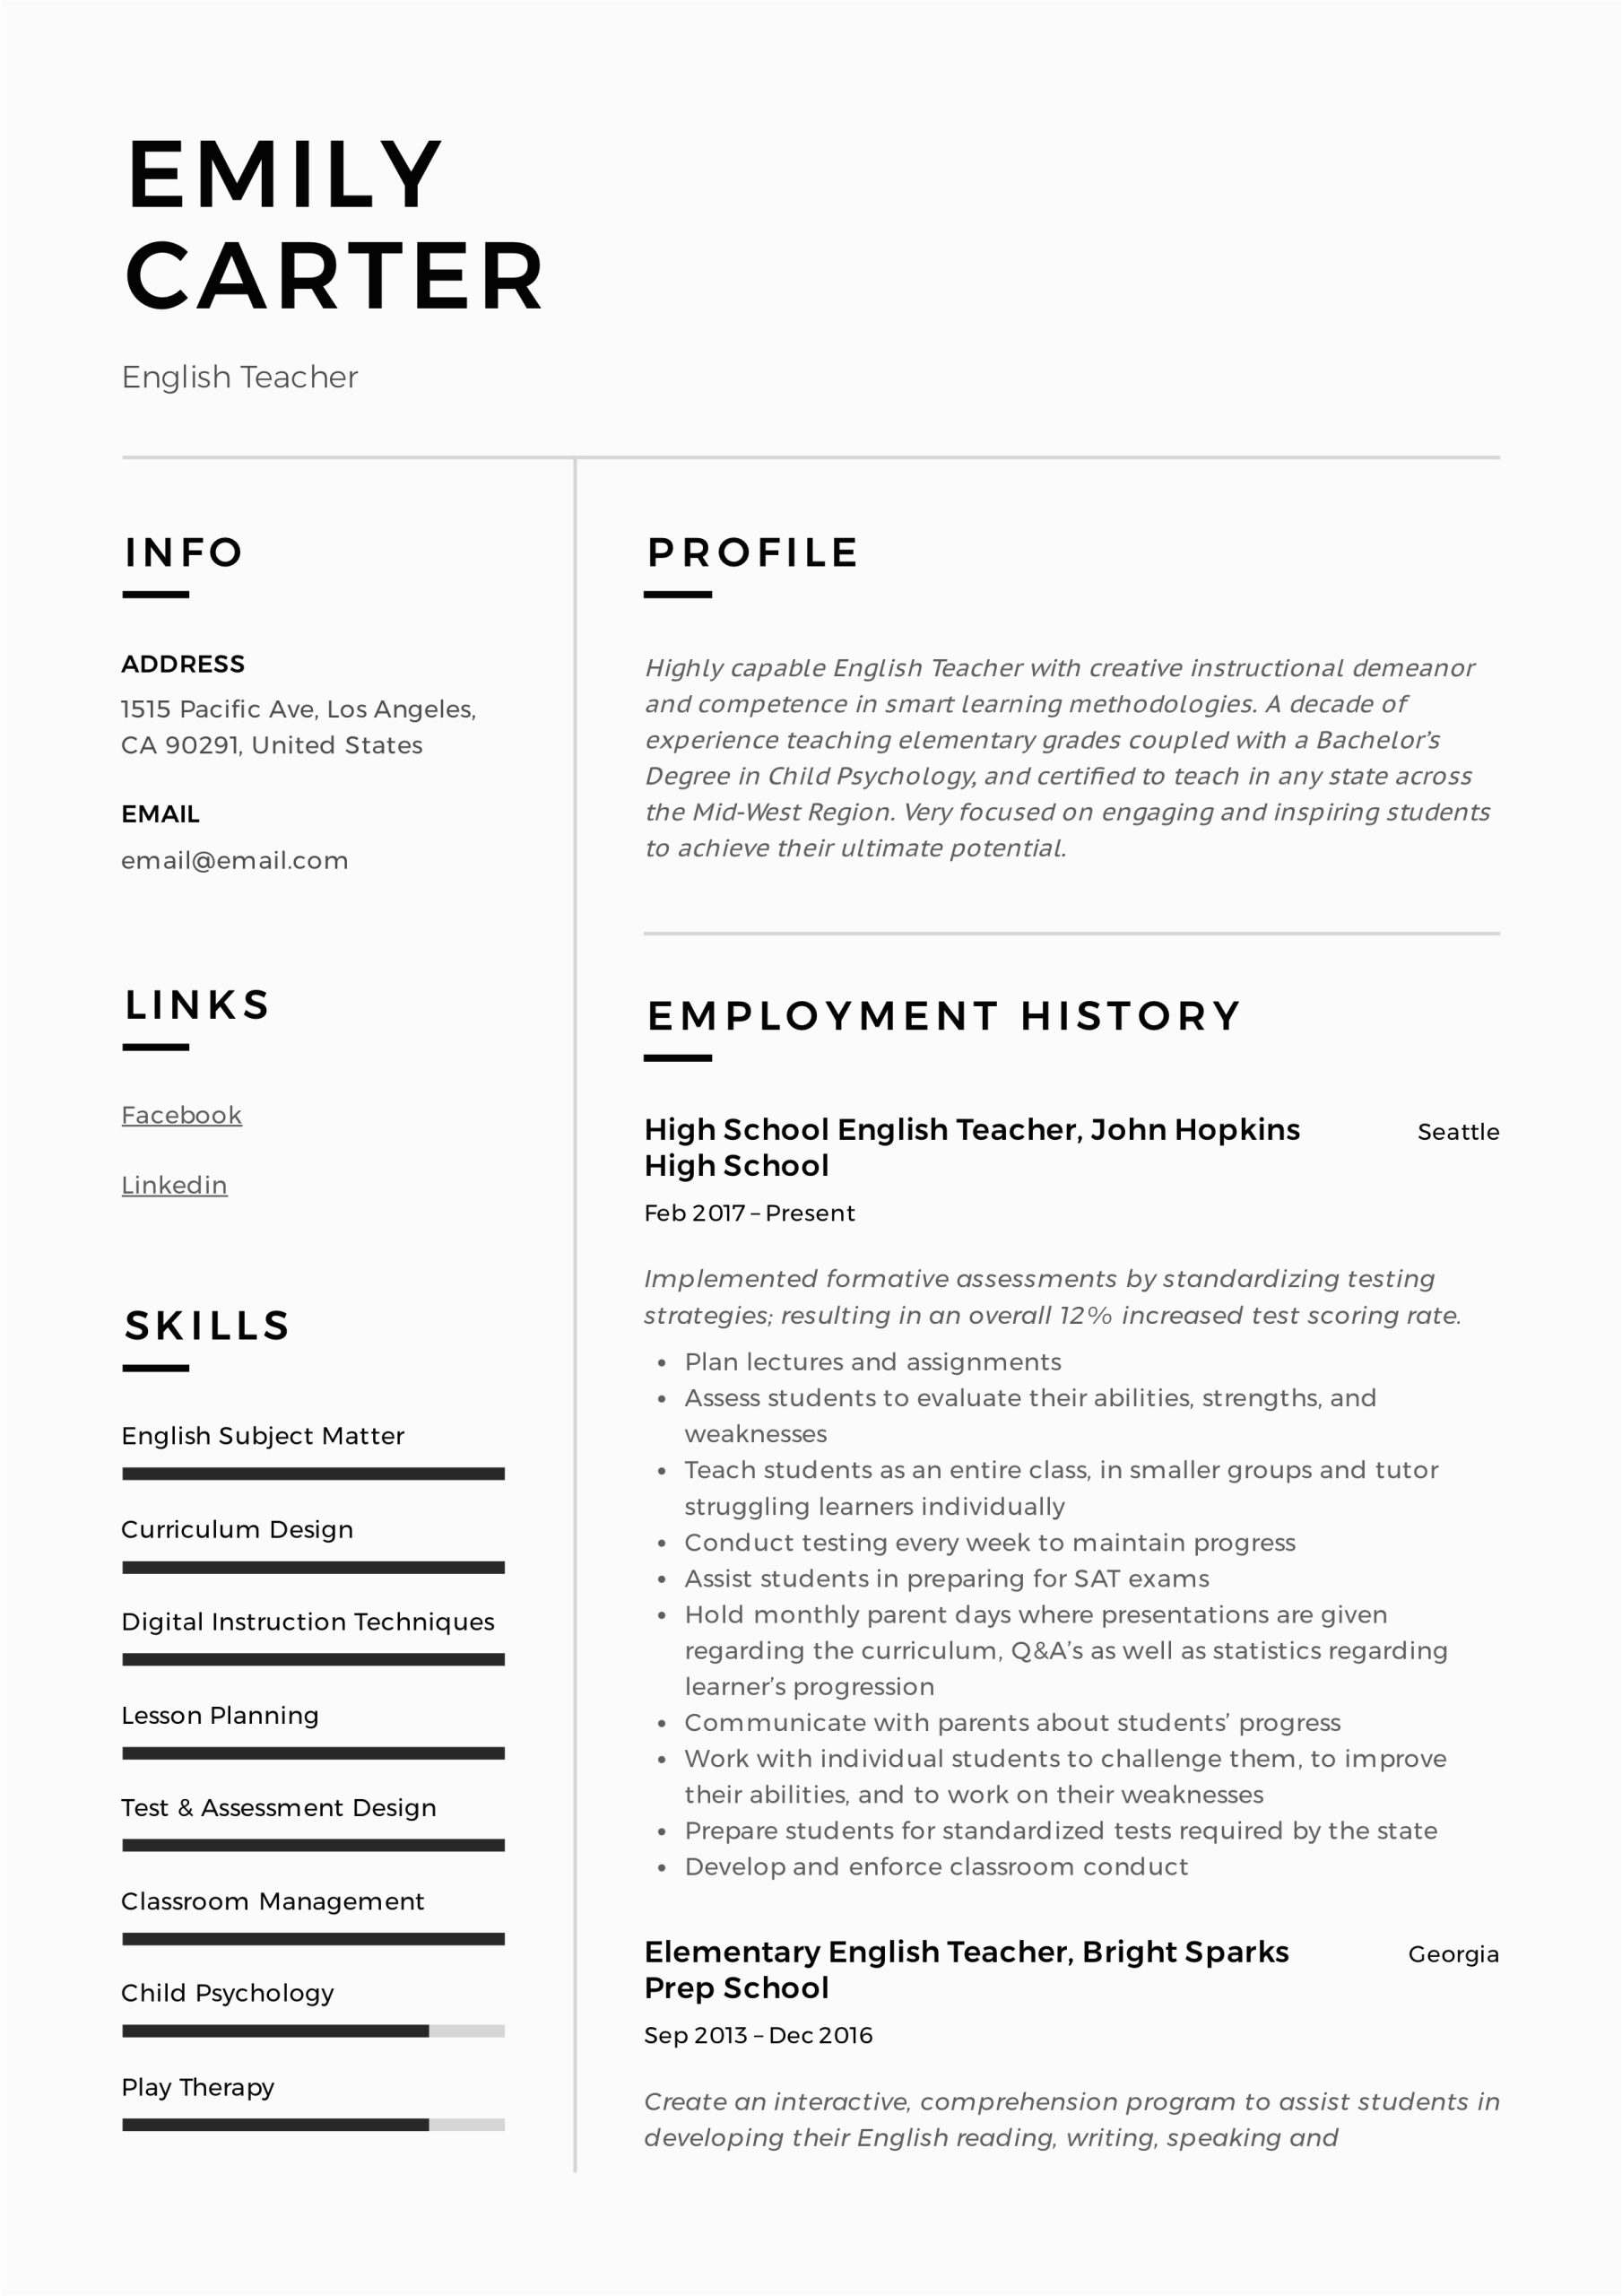 Sample Resume for Teaching English Online English Teacher Resume & Writing Guide 12 Free Templates